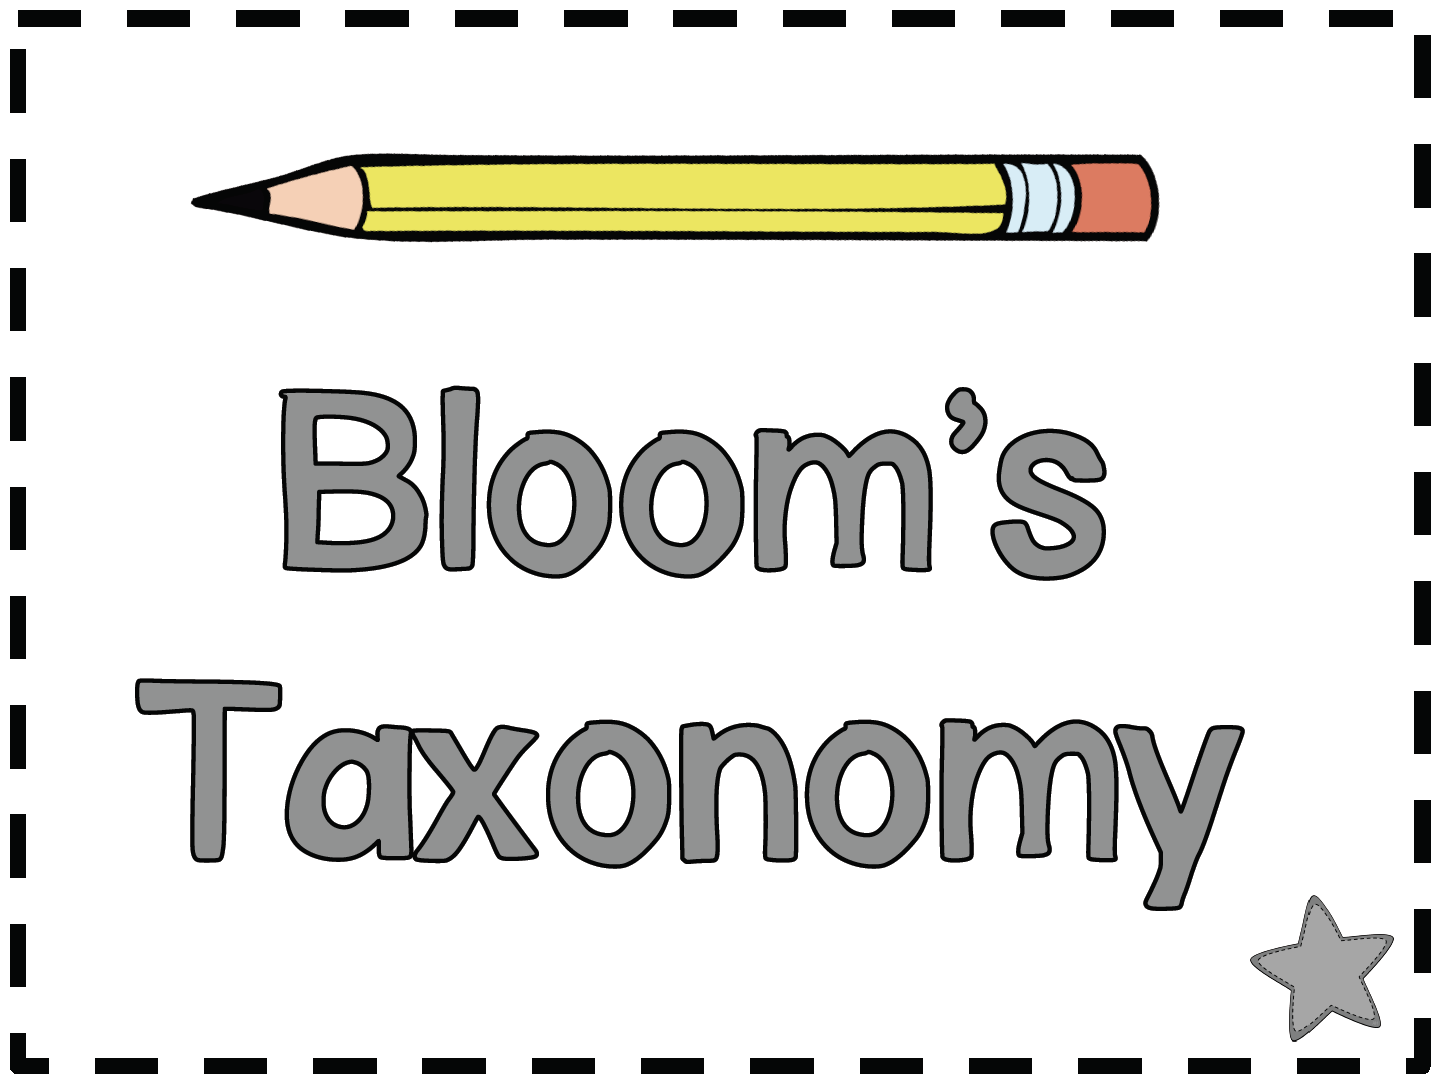 http://www.teacherspayteachers.com/Product/New-Blooms-Taxonomy-Posters-830607